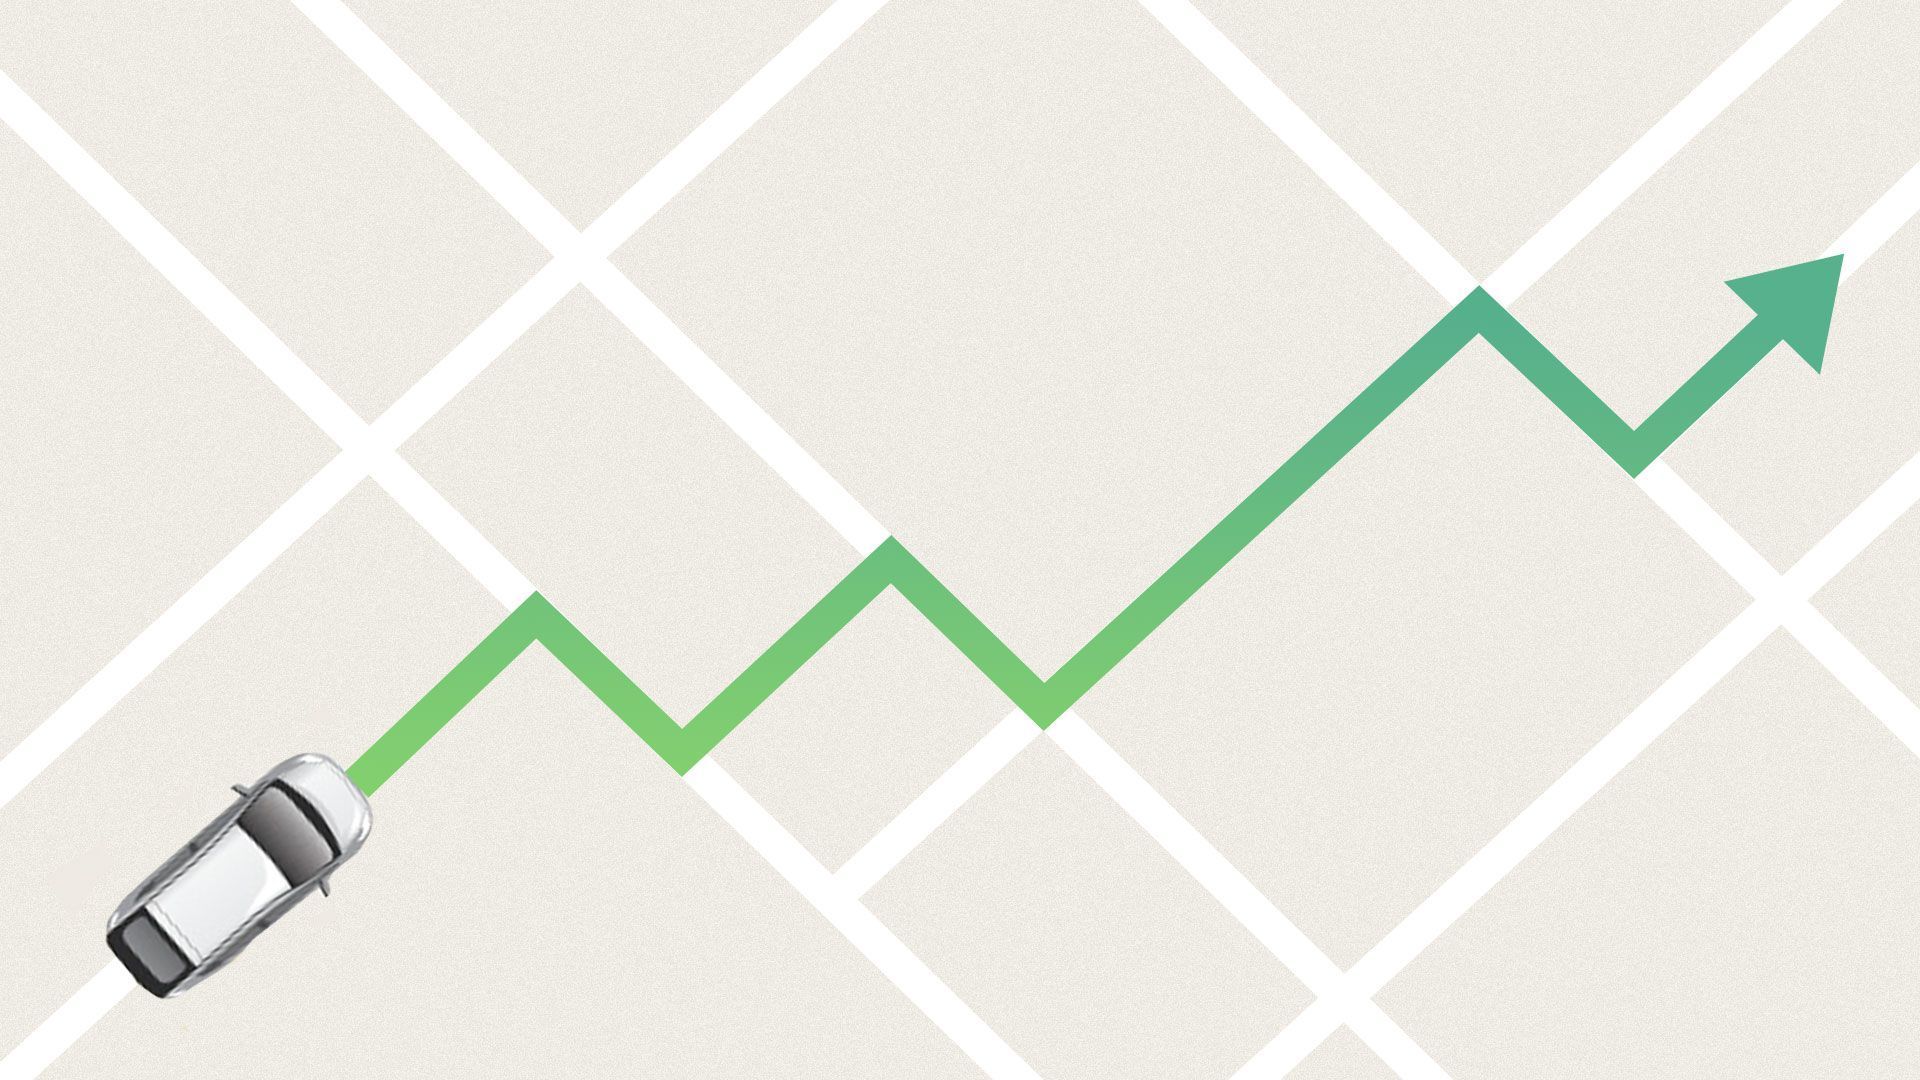 Illustration of an Uber car navigating streets on a map grid